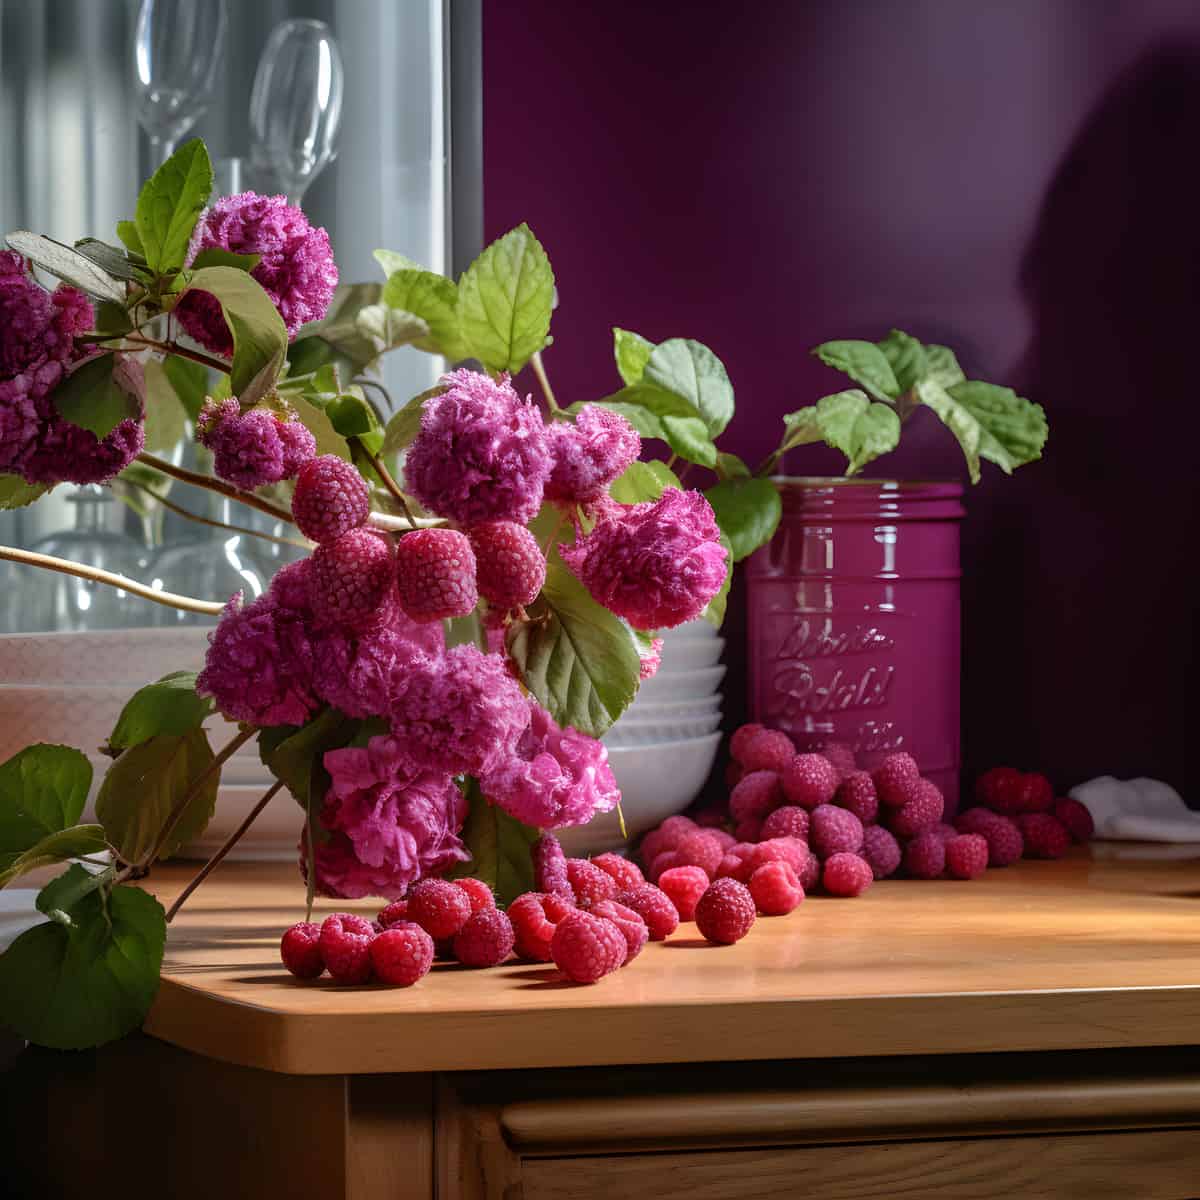 Purpleflowered Raspberry on a kitchen counter